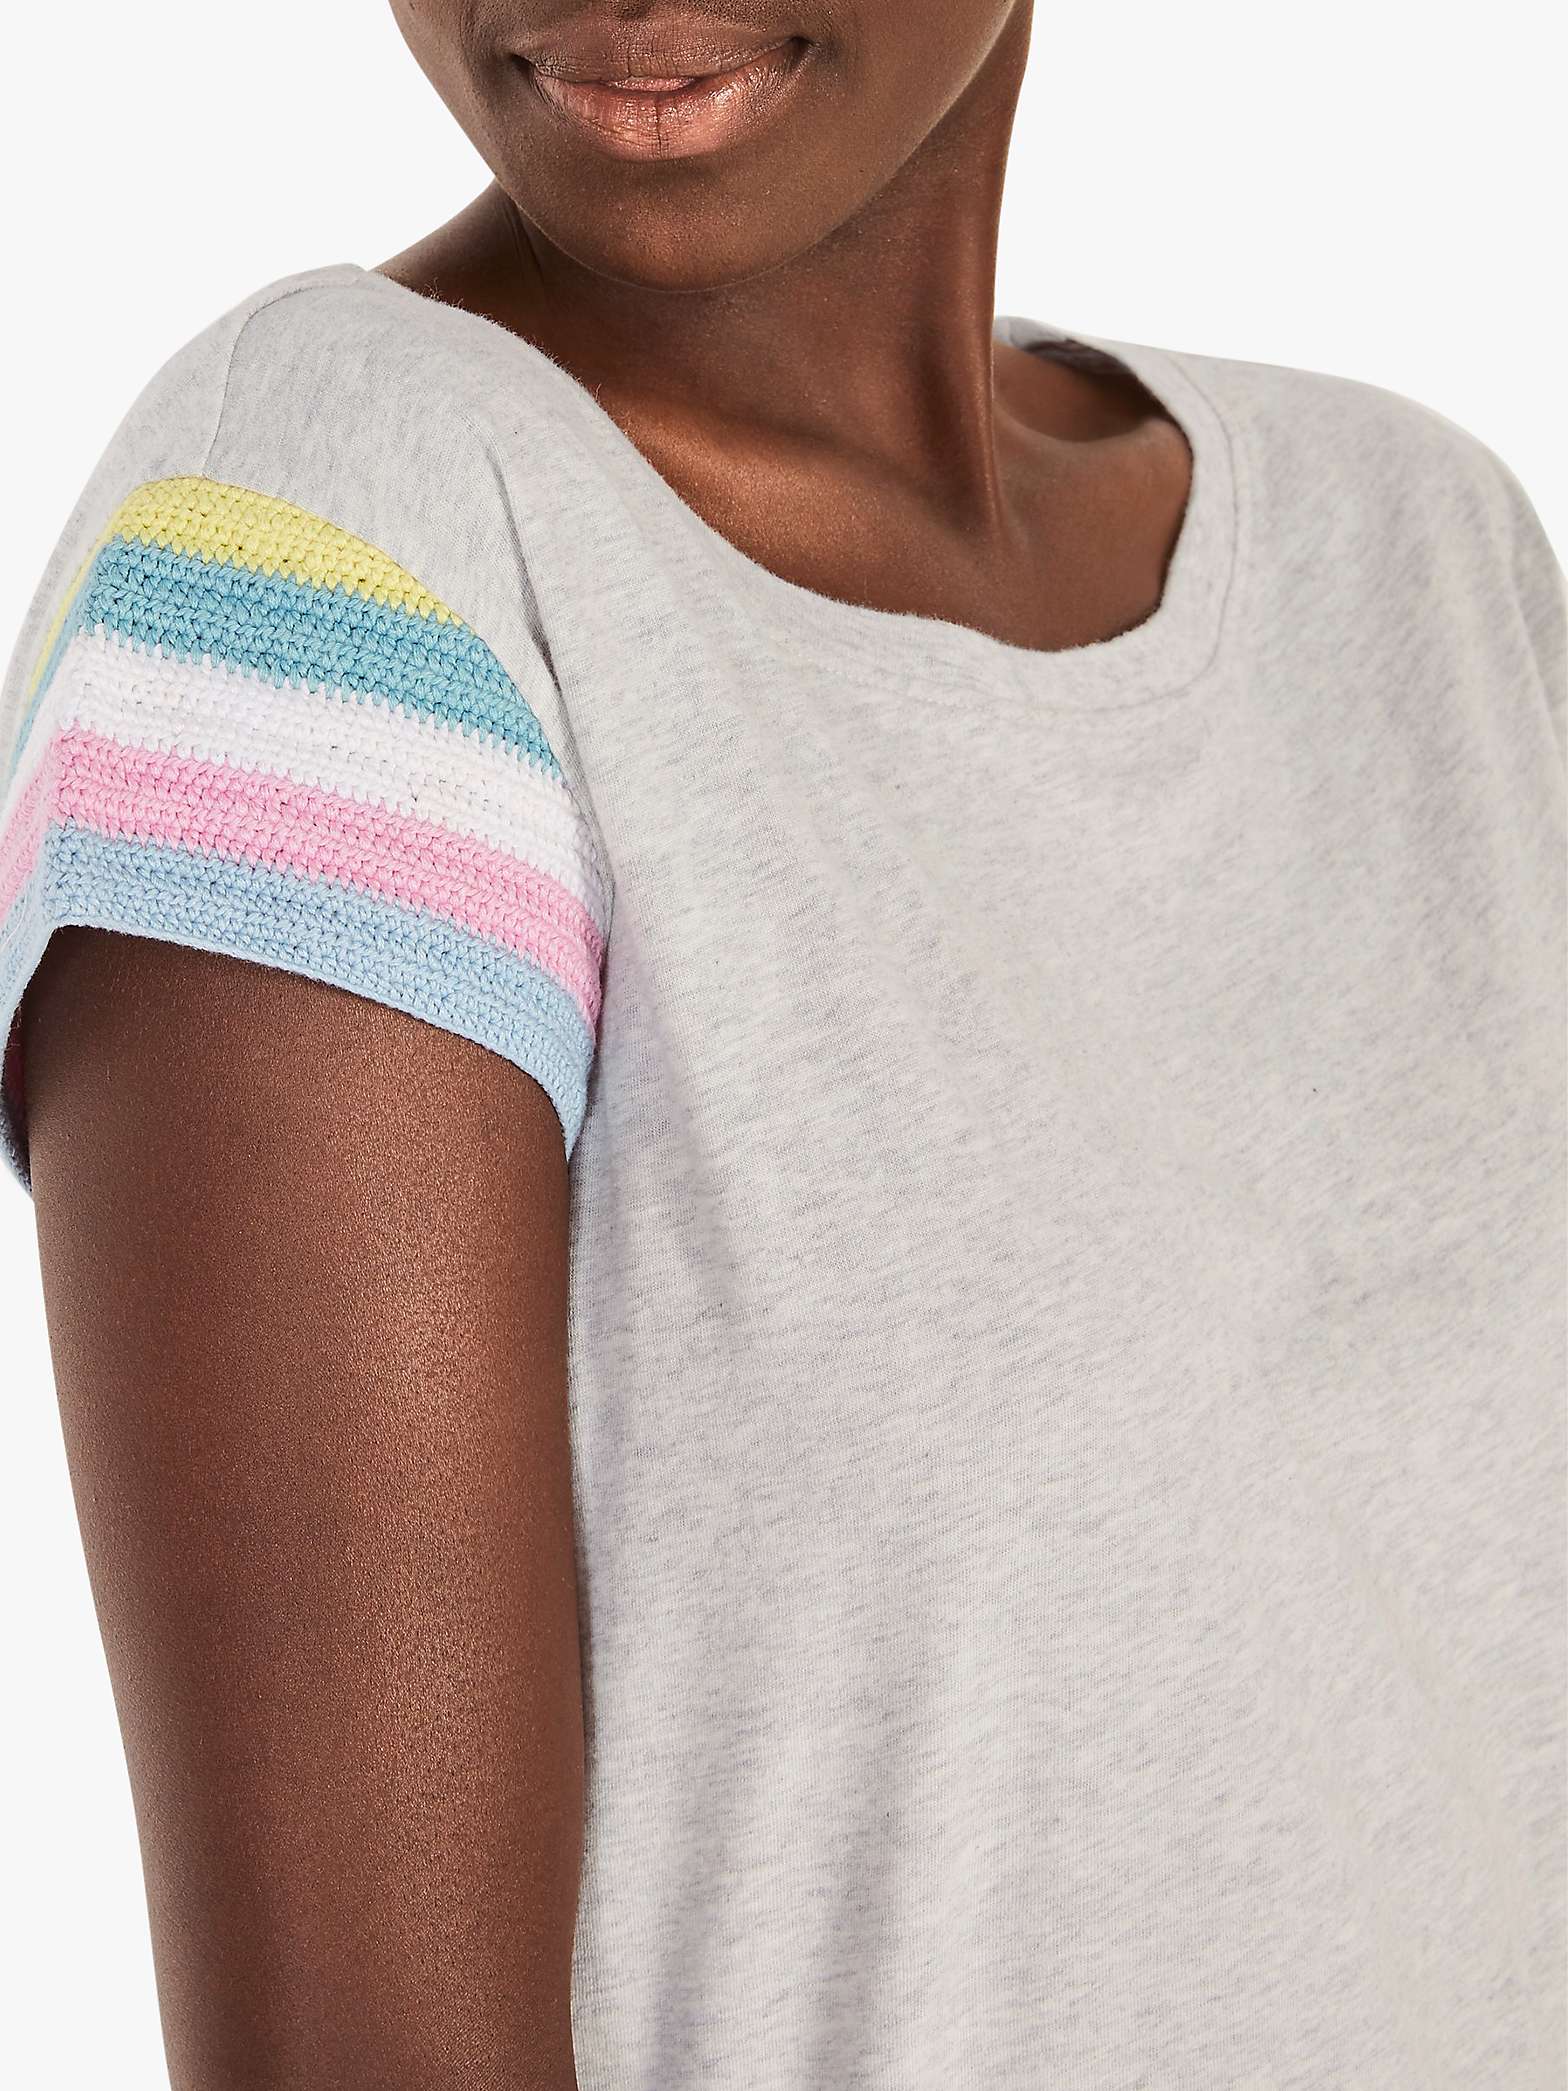 Buy hush Cotton Striped Sleeve T-Shirt, Grey Marl Online at johnlewis.com